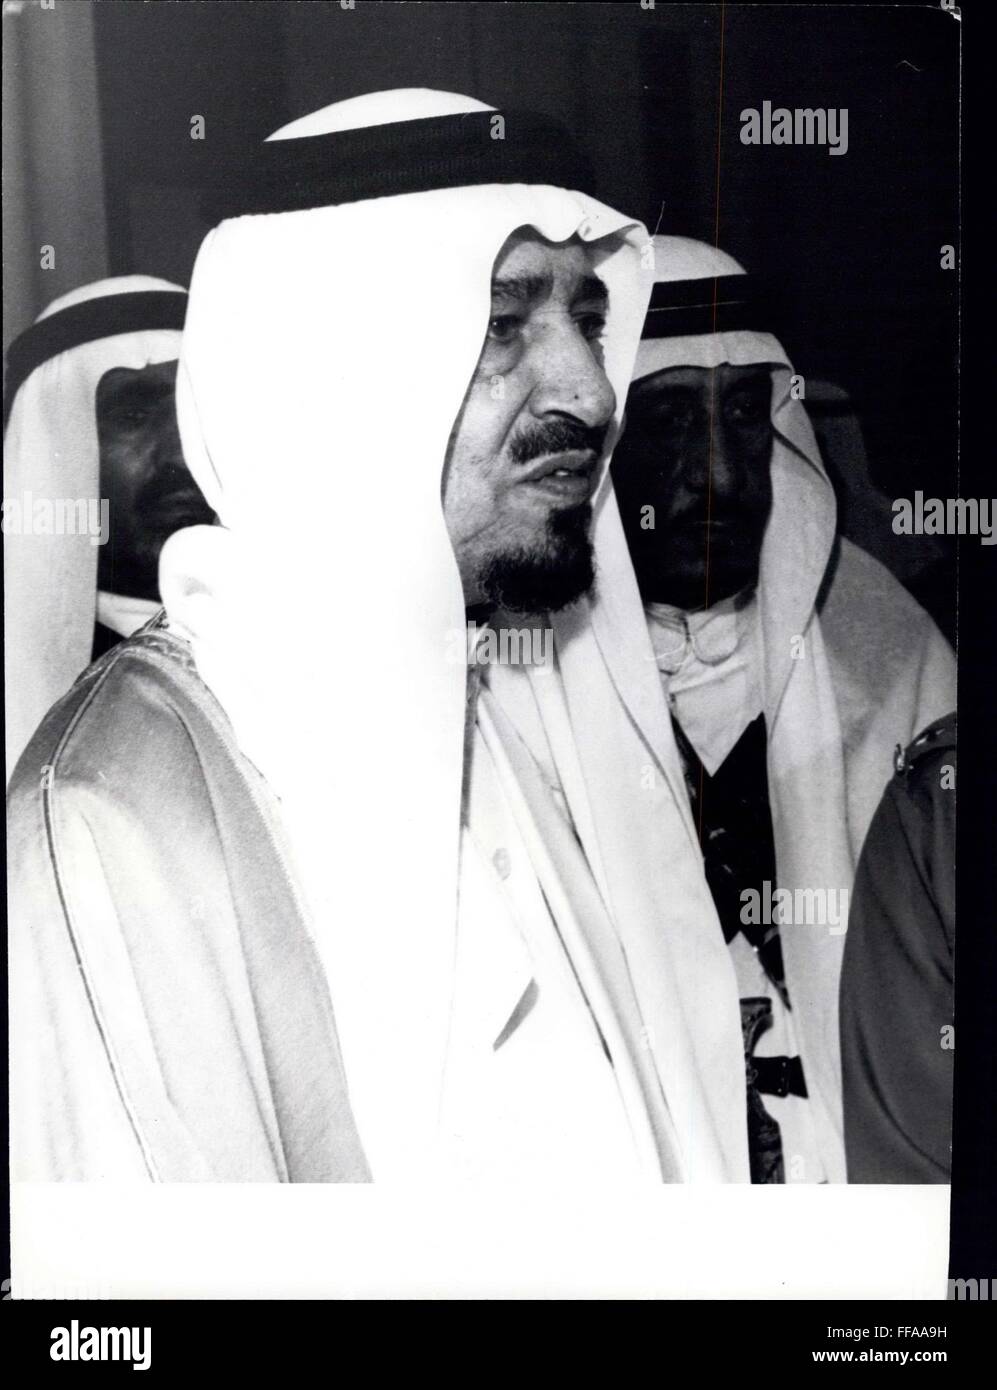 1974 - Arabia Saudita: Abdul Aziz, King Khalid ibn Abdul Aziz di Arabia Saudita. Credits: Camerapix. © Keystone Pictures USA/ZUMAPRESS.com/Alamy Live News Foto Stock